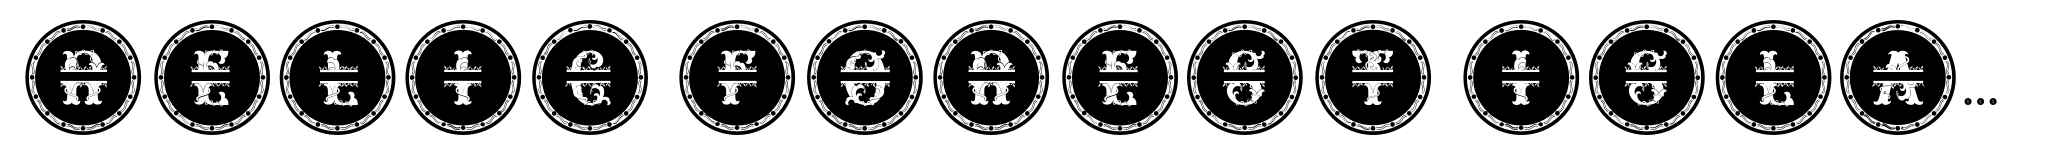 Relic Forest Island 3 Monogram circle black image